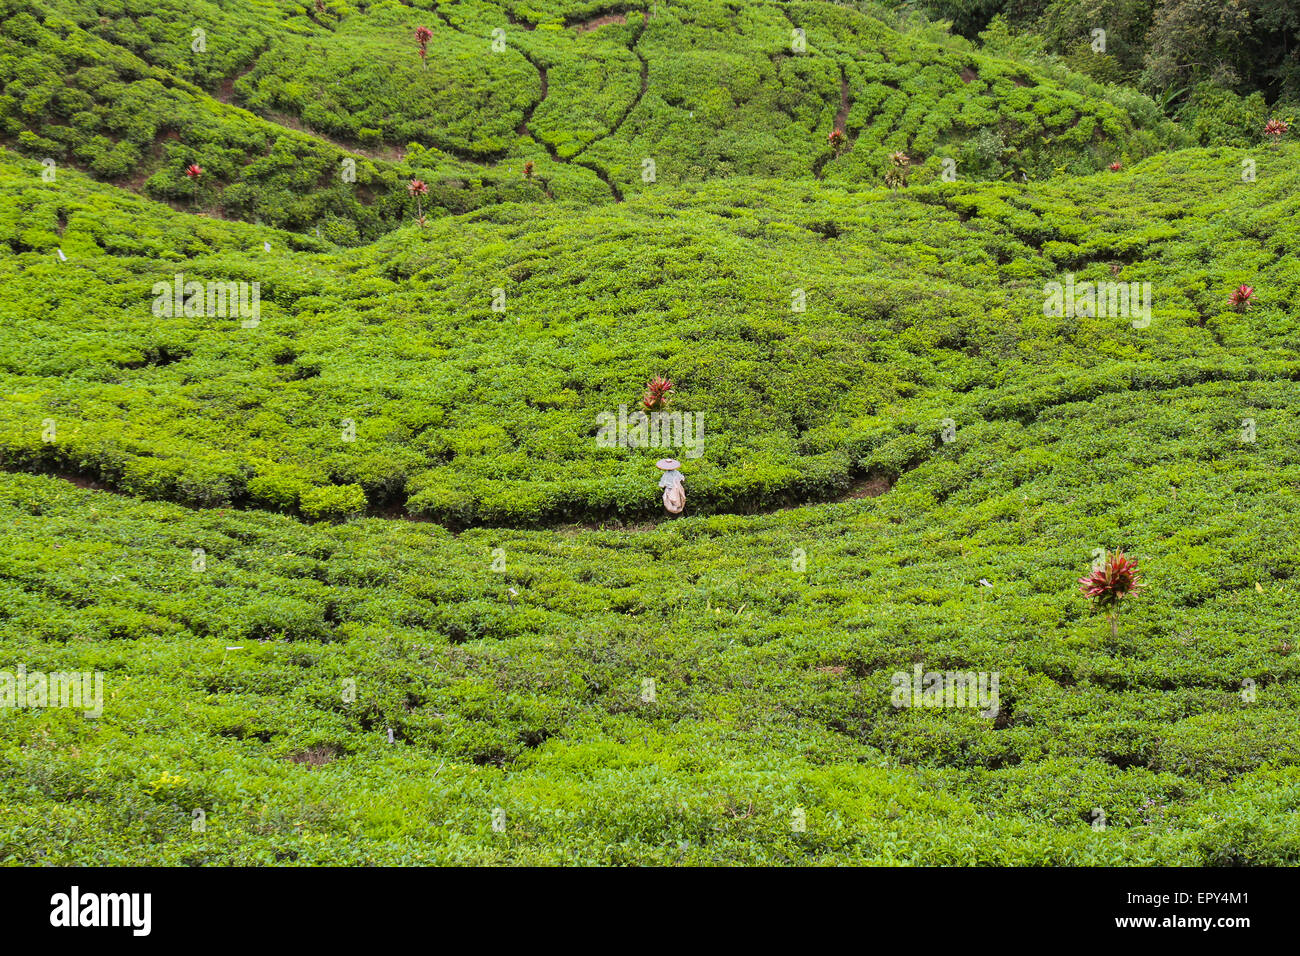 Teeplantage in der Nähe des Gunung Halimun Salak Nationalparks in Citalahab, Malasari, Nanggung, Bogor, West Java, Indonesien. Stockfoto